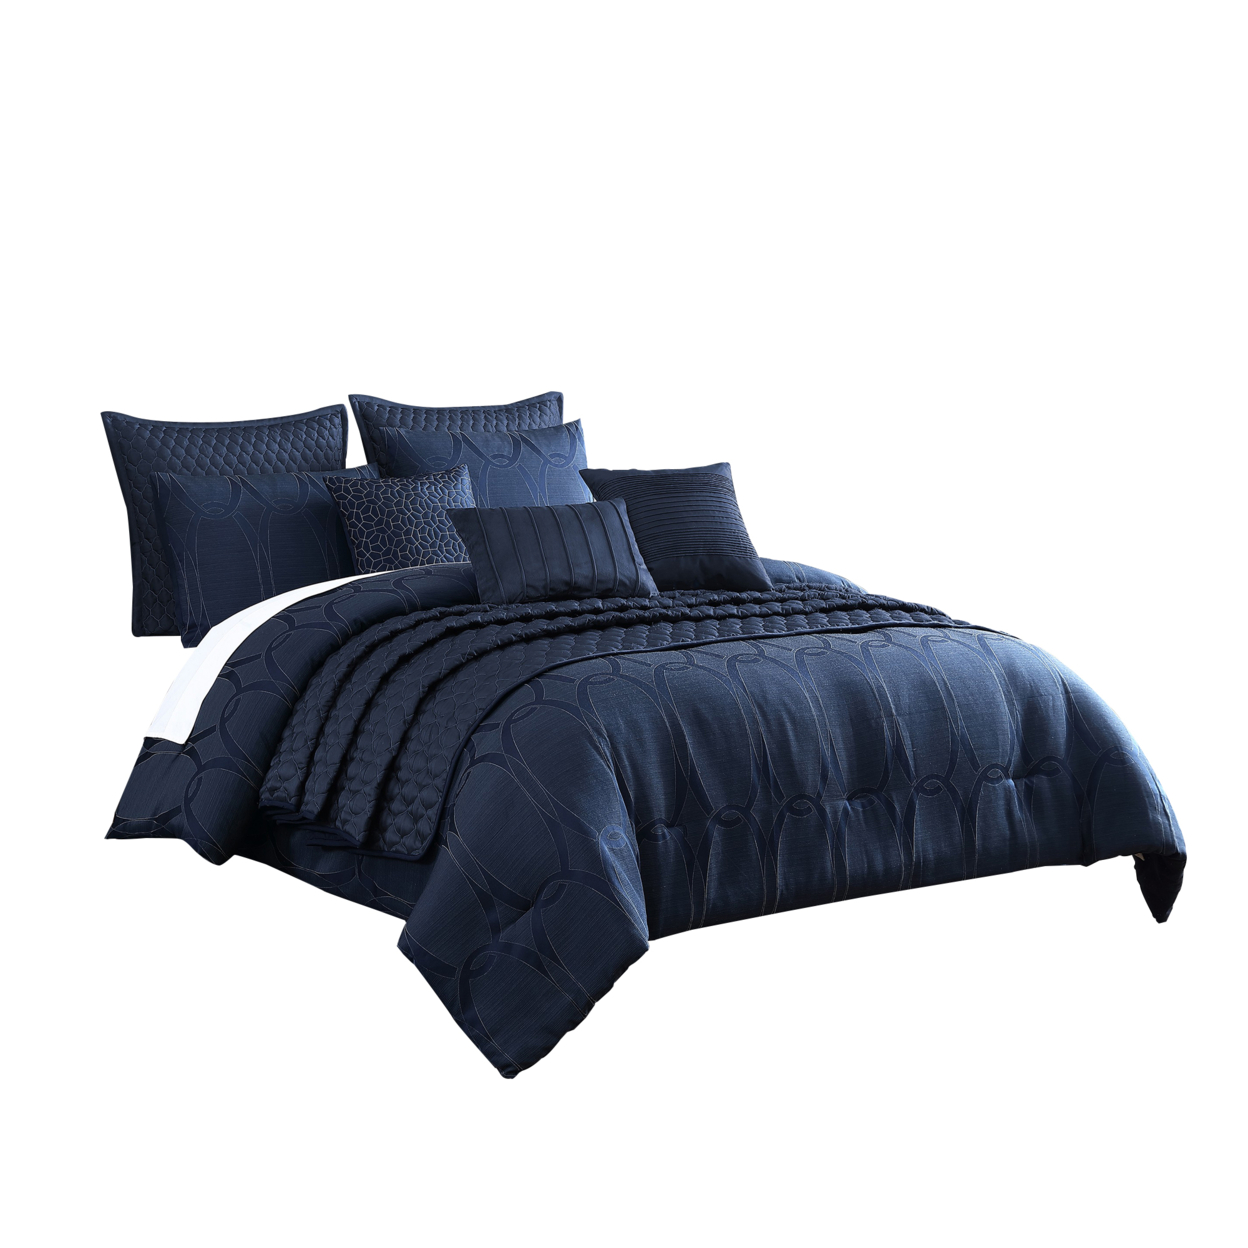 10 Piece Queen Polyester Comforter Set With Geometric Print, Dark Blue- Saltoro Sherpi